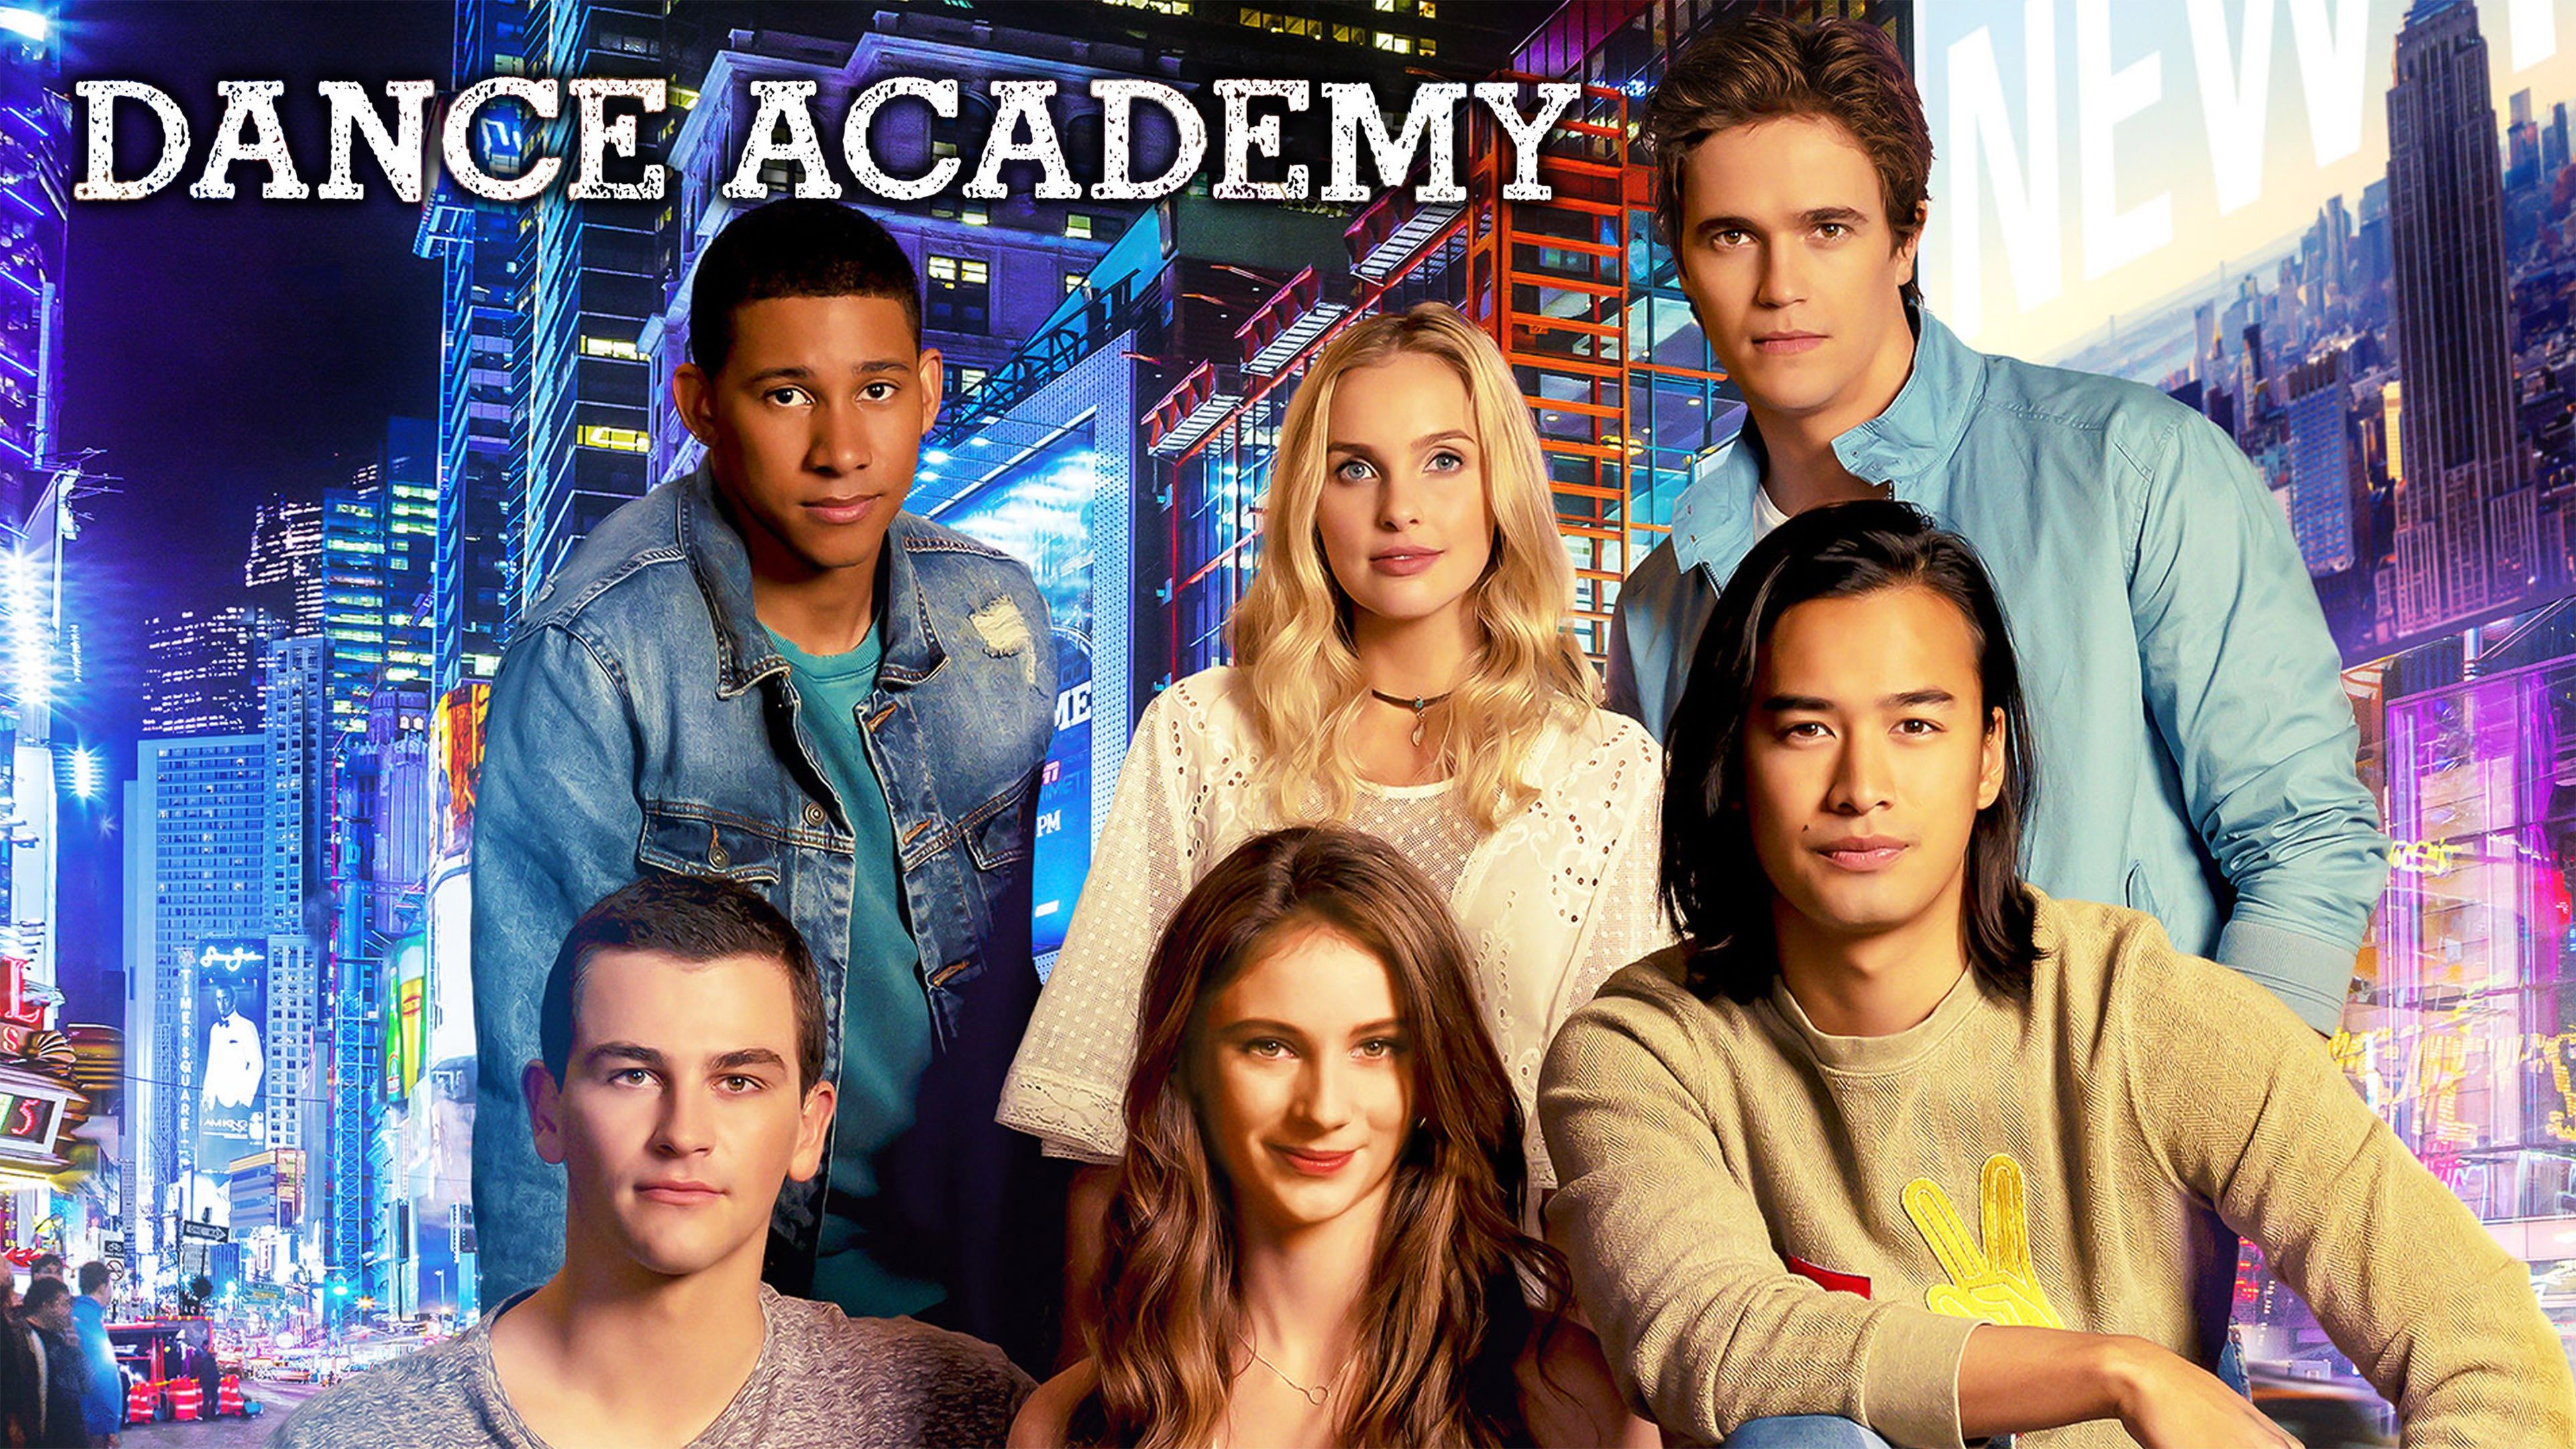 "Dance Academy: The Movie photo 12"